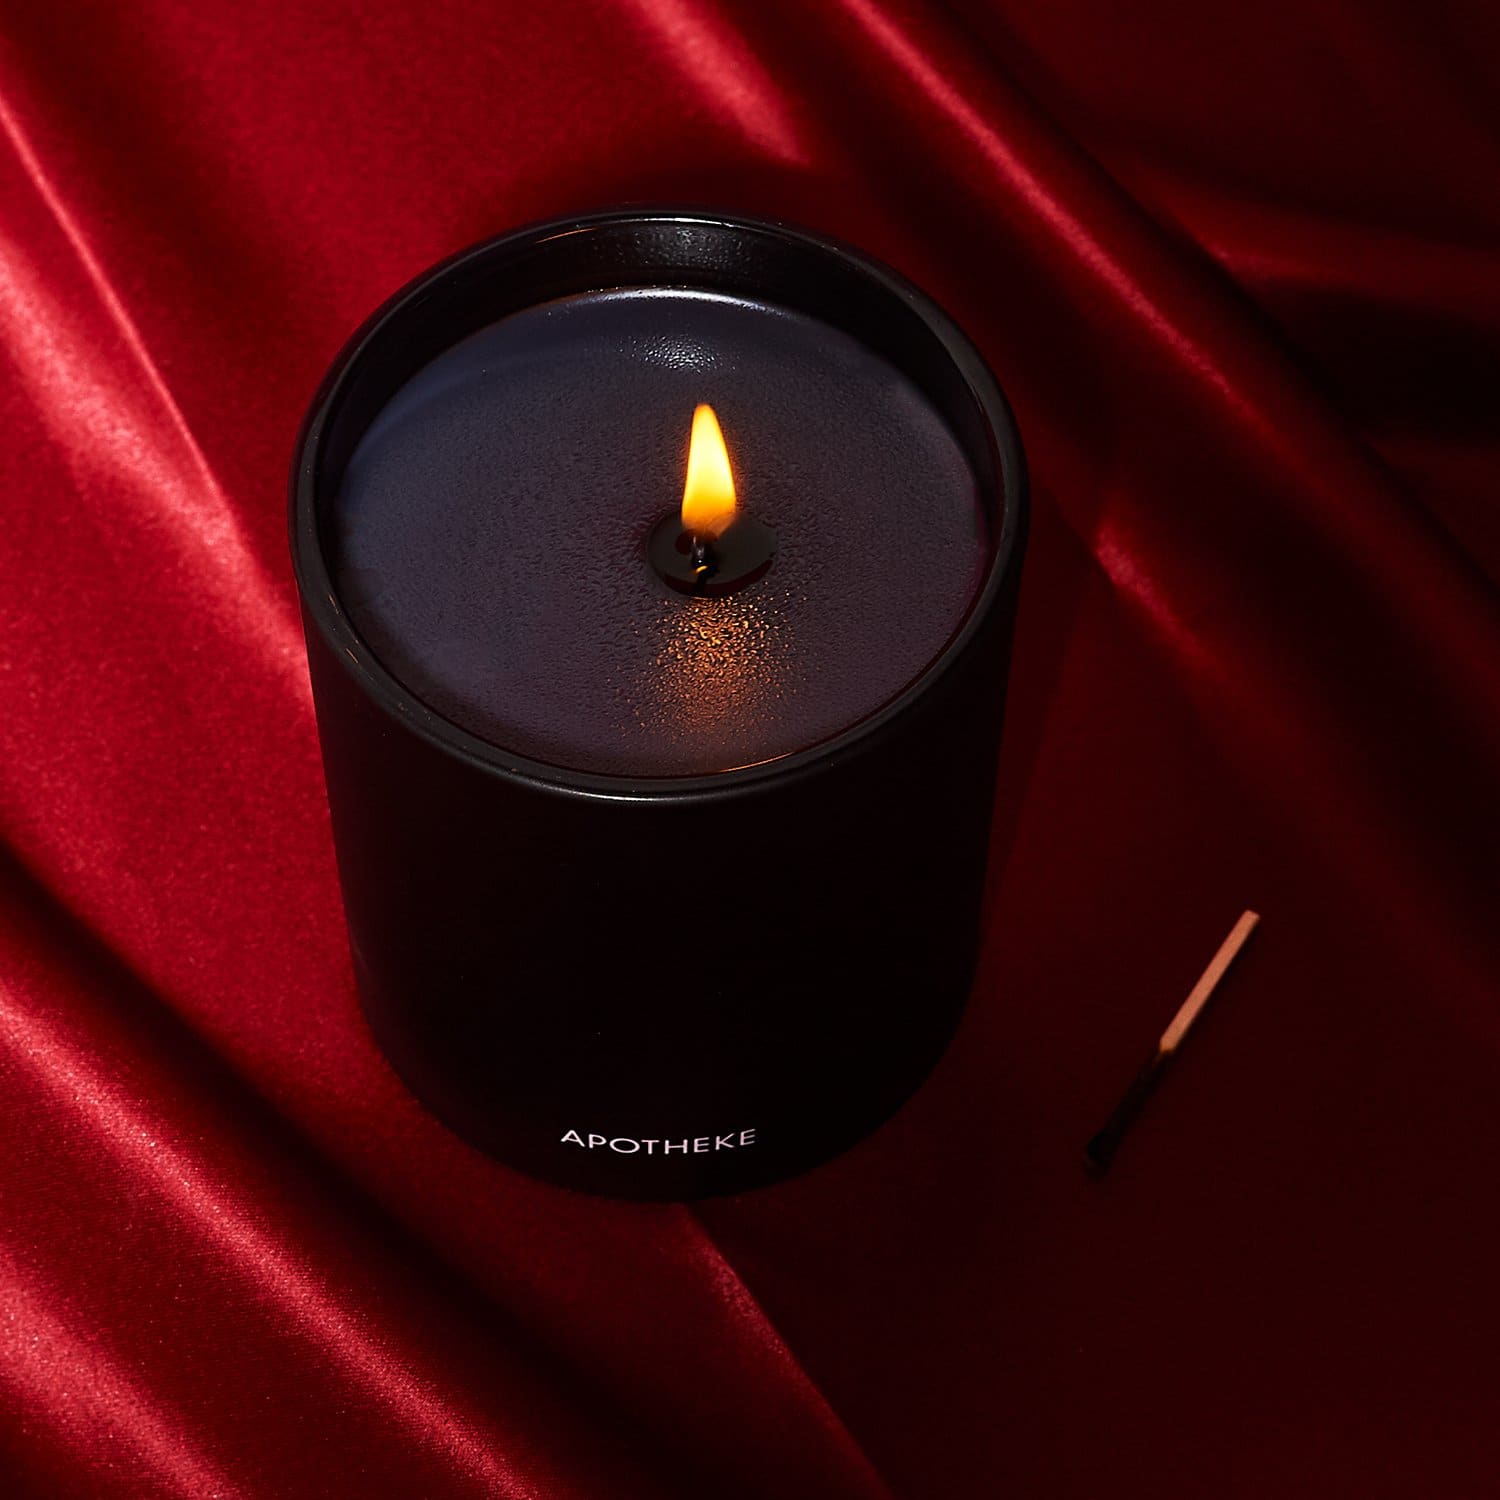 Apotheke Charcoal Candle Apotheke - Black Candle - Brooklyn 